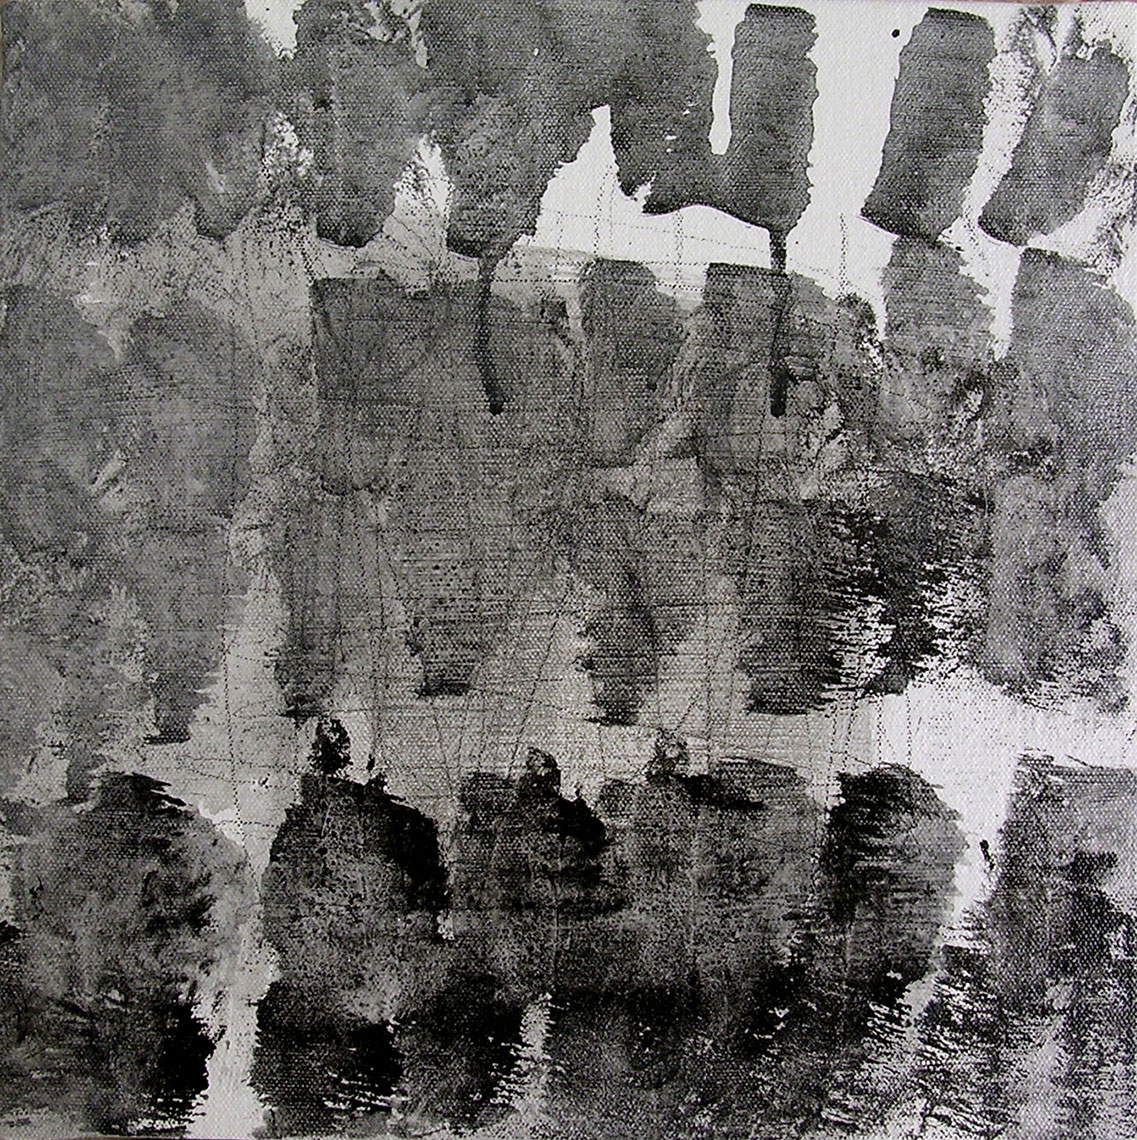 90 DAYS OF IMPROVISATION NO. 5.  Acrylic on canvas.  12”x12”.  2005